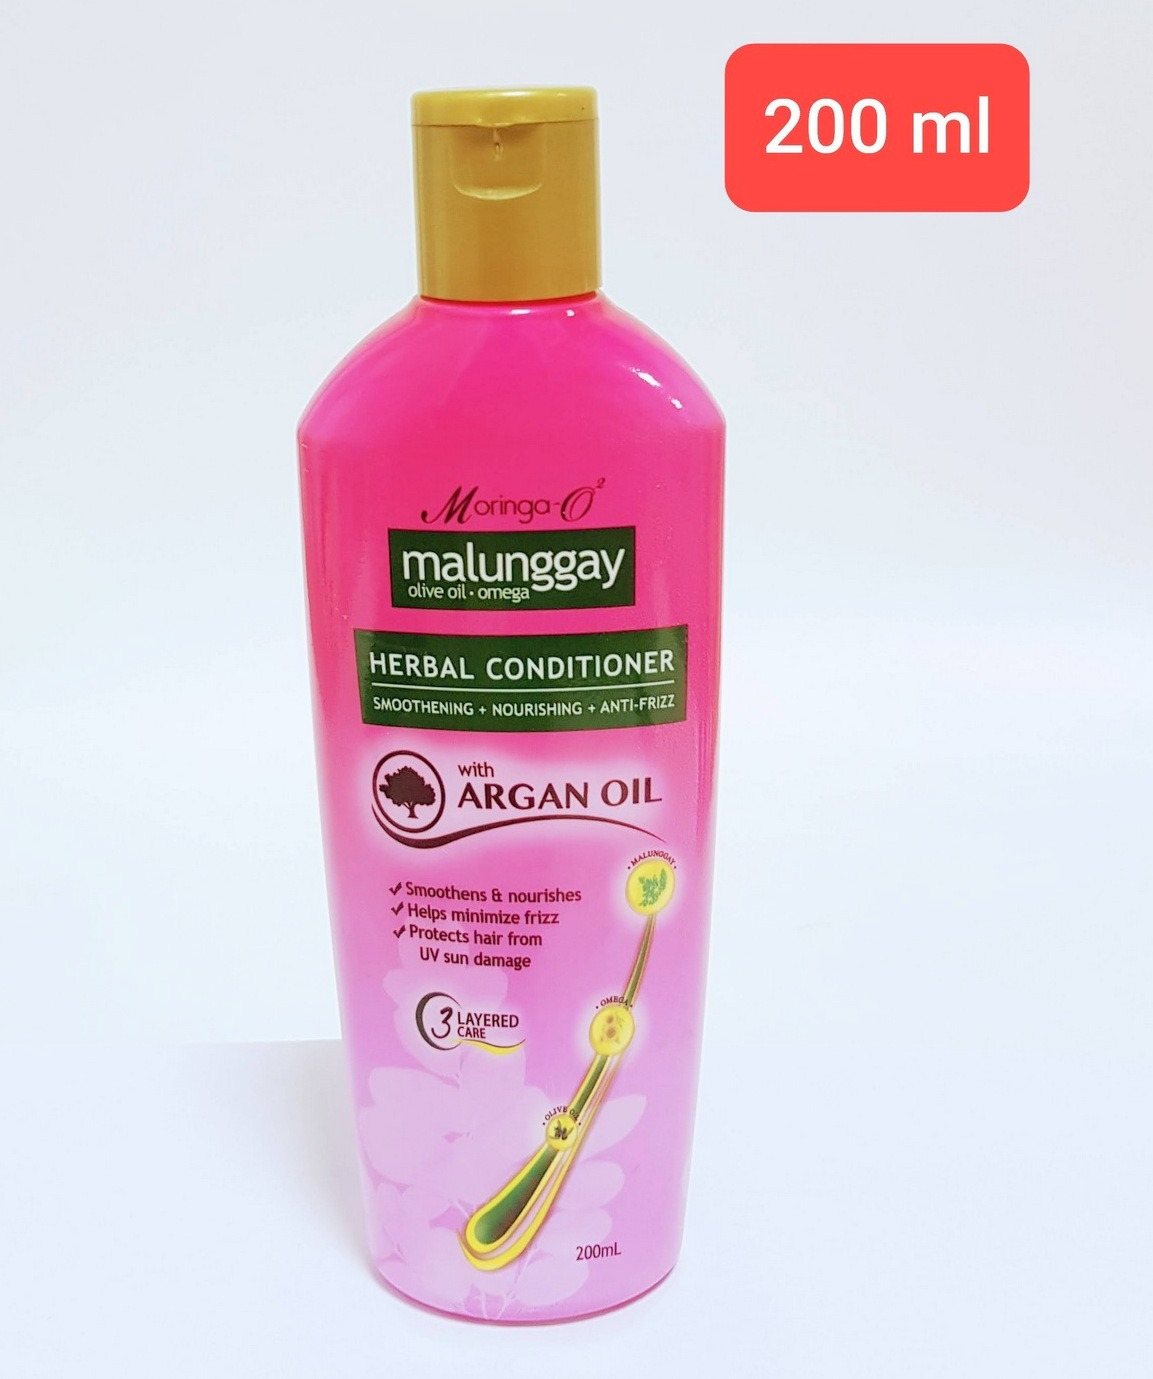 Moringa-O2 Herbal Anti-Frizz Conditioner with Argan Oil (200ml) (Cargo)